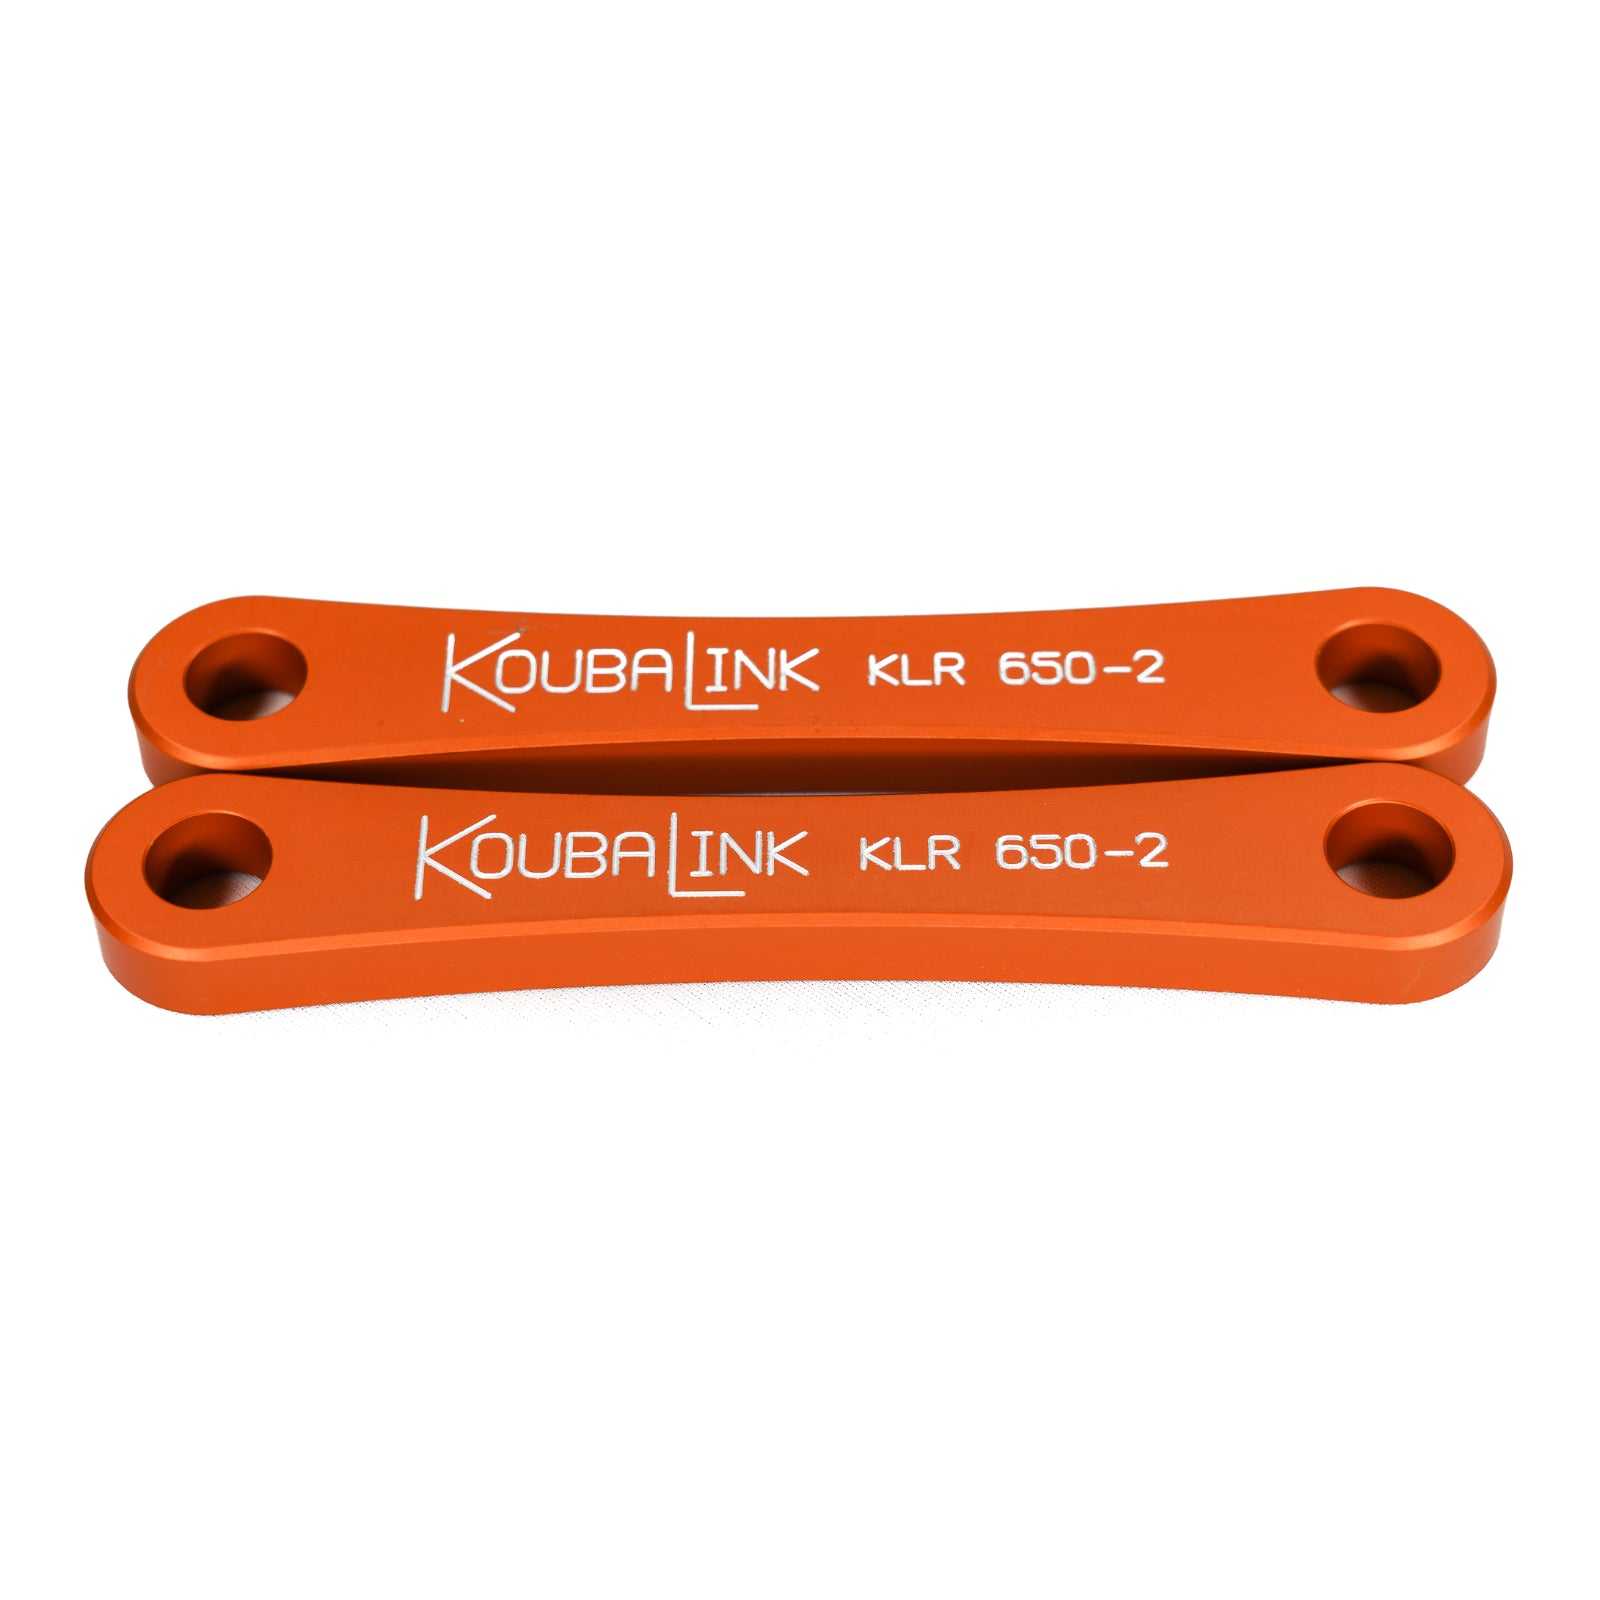 KoubaLink, Koubalink 51 mm Tieferlegungsgestänge KLXR650-2 – Orange